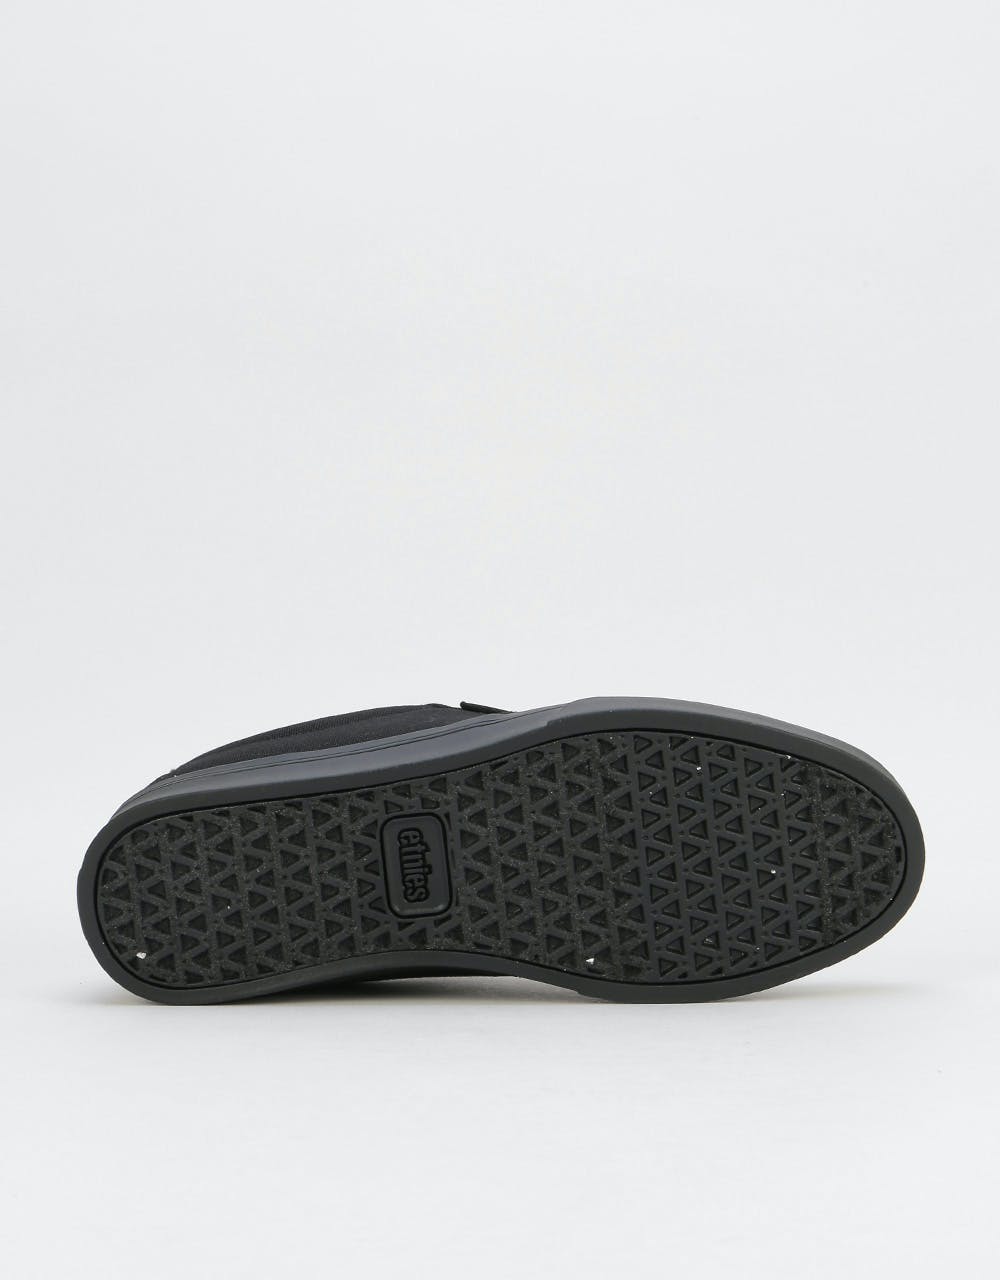 Etnies Jameson 2 Eco Skate Shoes - Black/Black